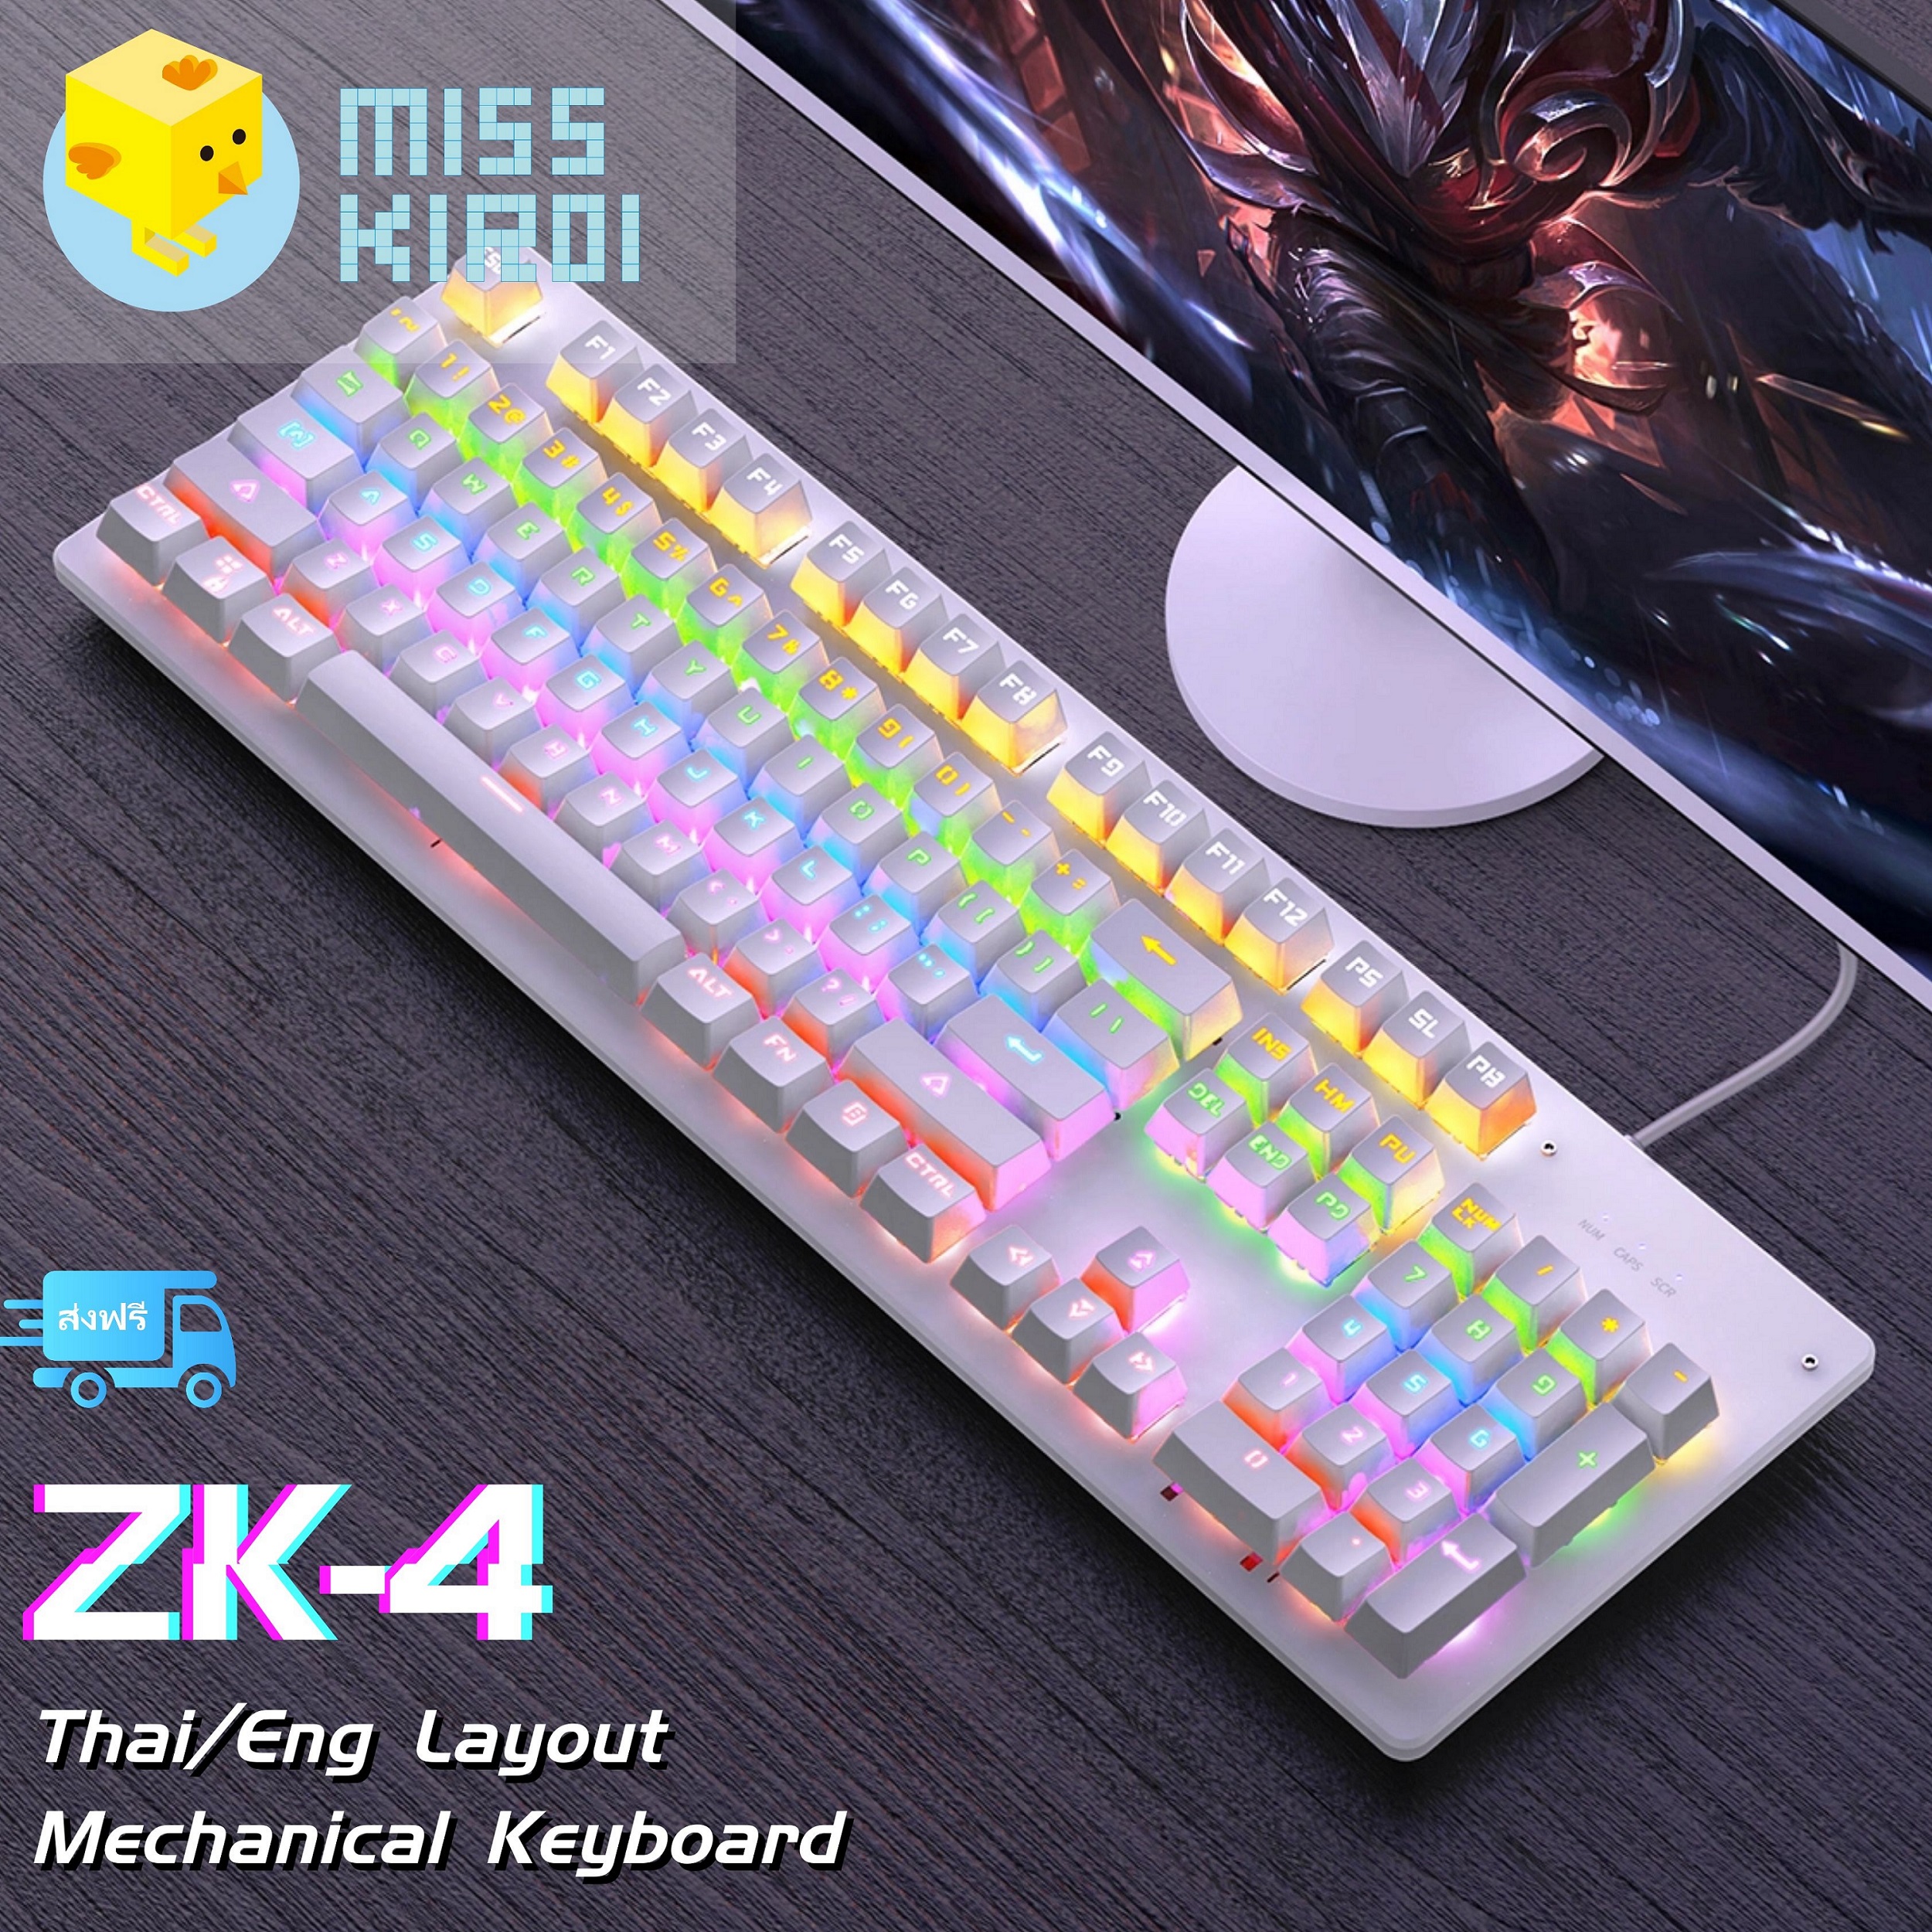 [Professional]  Thai/Eng คีย์บอร์ดเกมมิ่ง ZK-4 USB คีย์บอร์ด LED คีย์บอร์ด USB Wiring Mechanical Keyboard LED E-sport Backlight Gaming Keyboard  For PC Computer Gamer  LOL PUBG DOTA